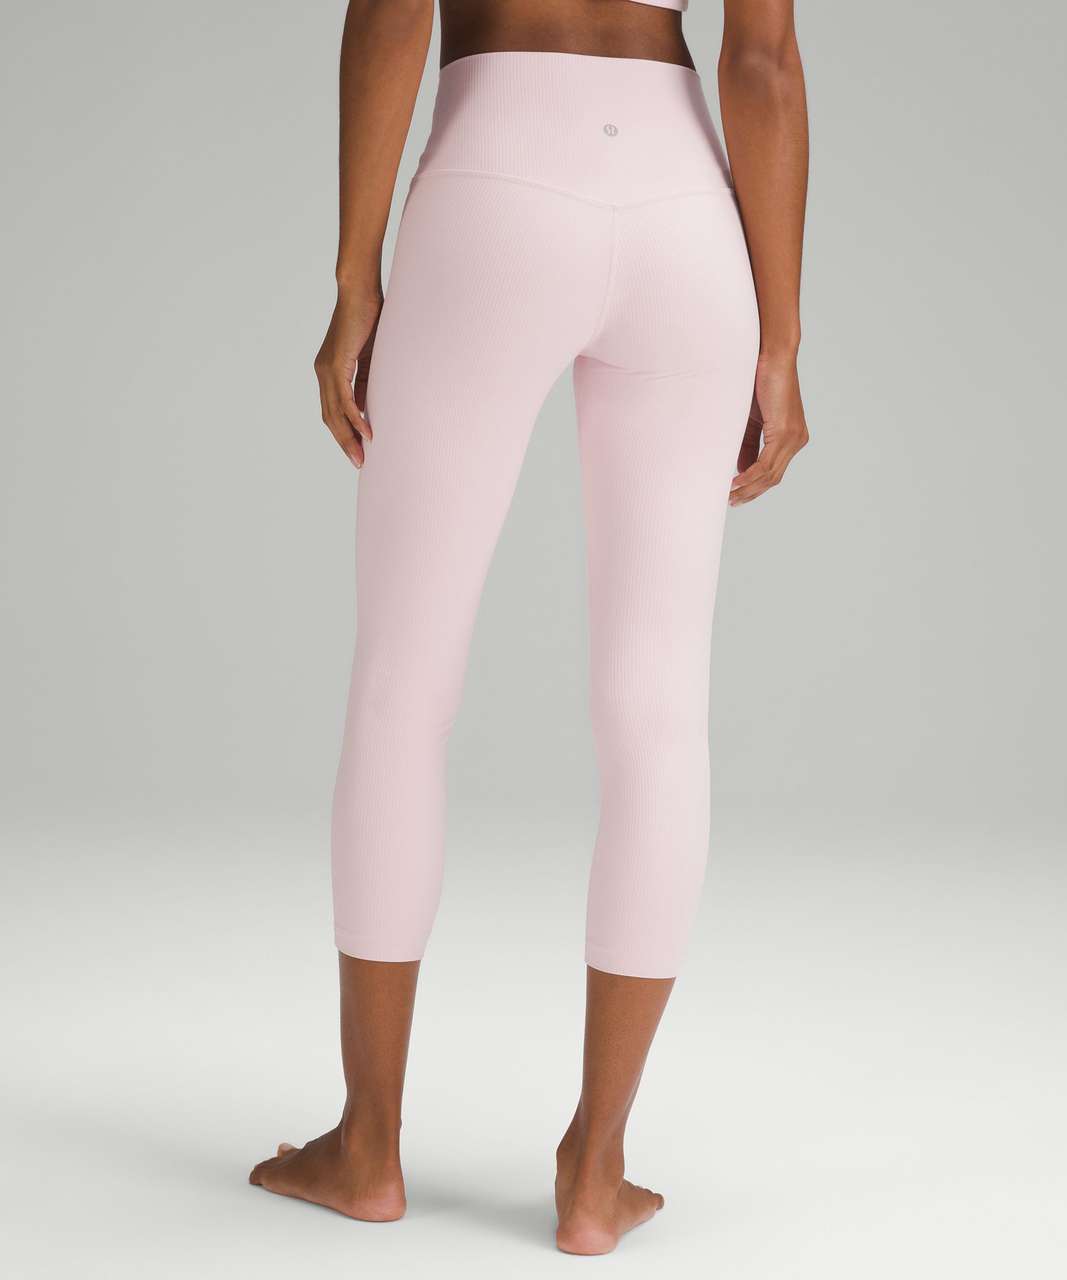 Lululemon Align Crop Leggings Camo Pink Size 6 - $79 (19% Off